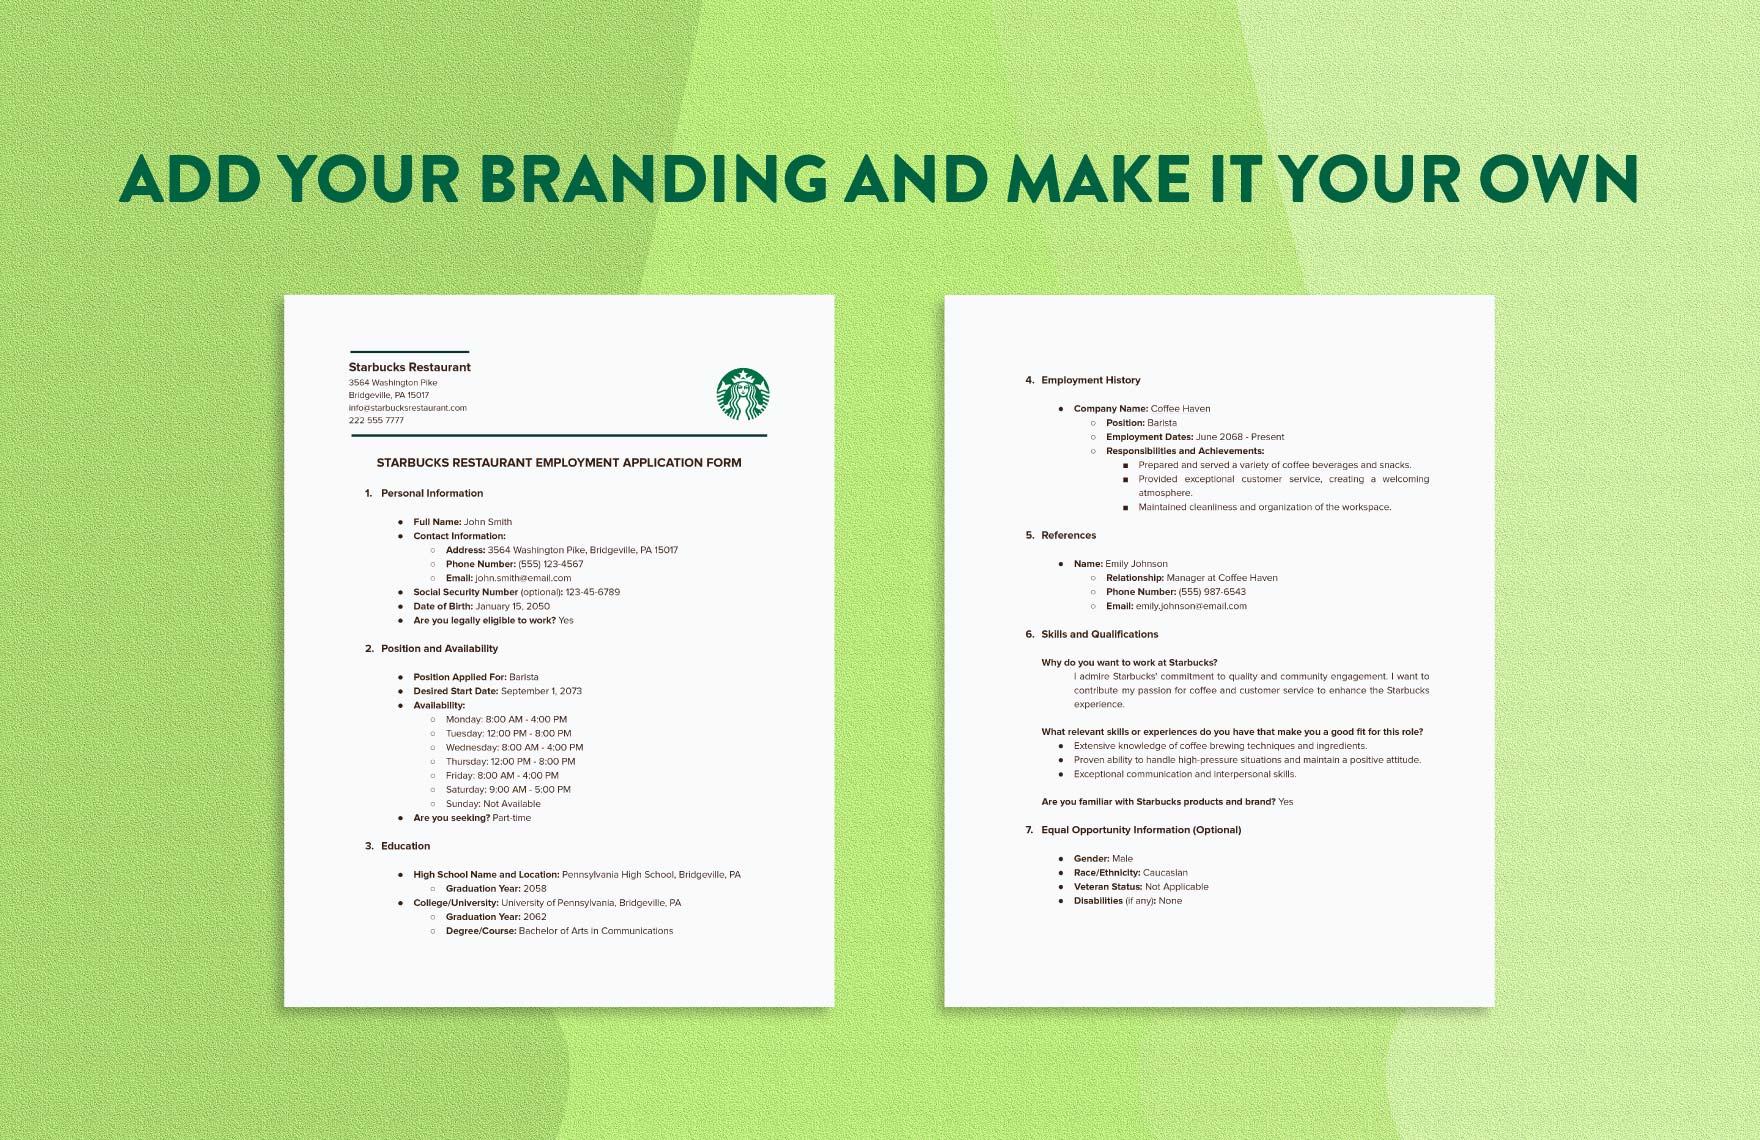  Sample Starbucks Restaurant Employment Application Form Template